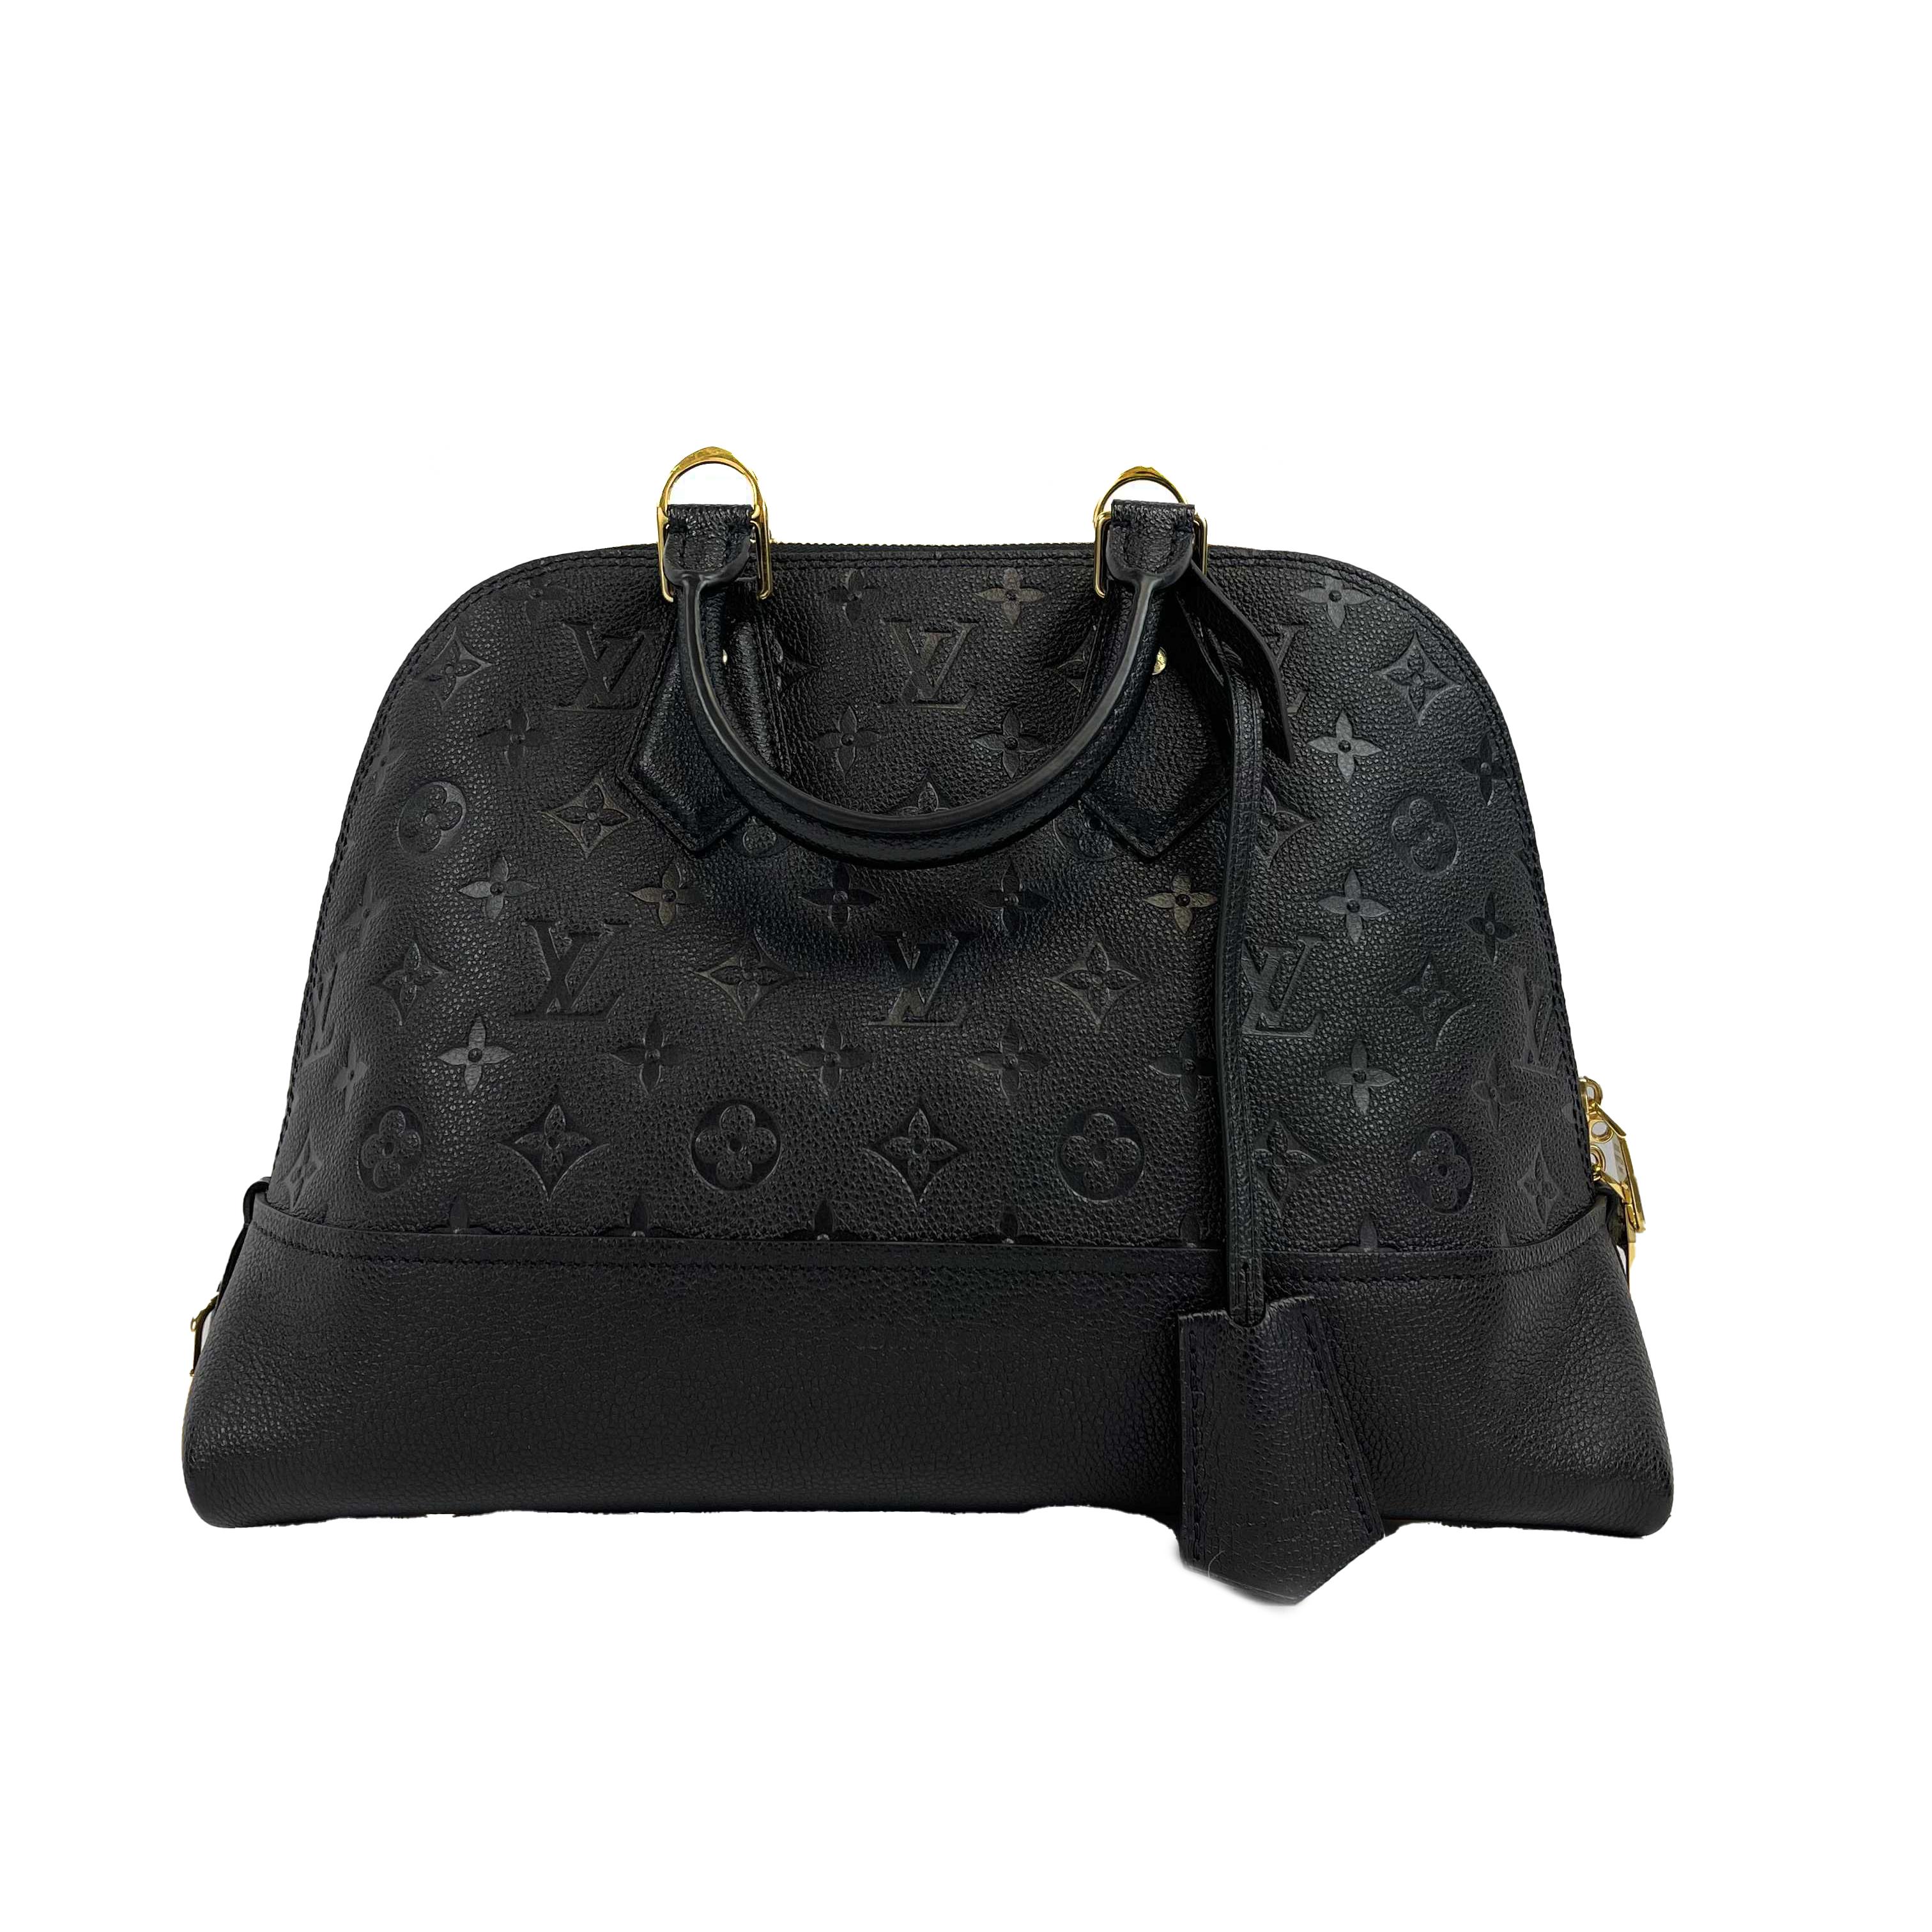 Louis Vuitton - Neo Alma PM Monogram Empreinte Leather Top Handle Shoulder Bag
Measurements

Width: 13.8 in / 35.052 cm
Height: 9.1 in / 23.114 cm
Depth: 5.9 in / 14.986 cm
Strap Drop: 16.5 in / 41.91 cm
Handle Drop: 3.5 in / 8.89 cm
Details

Made